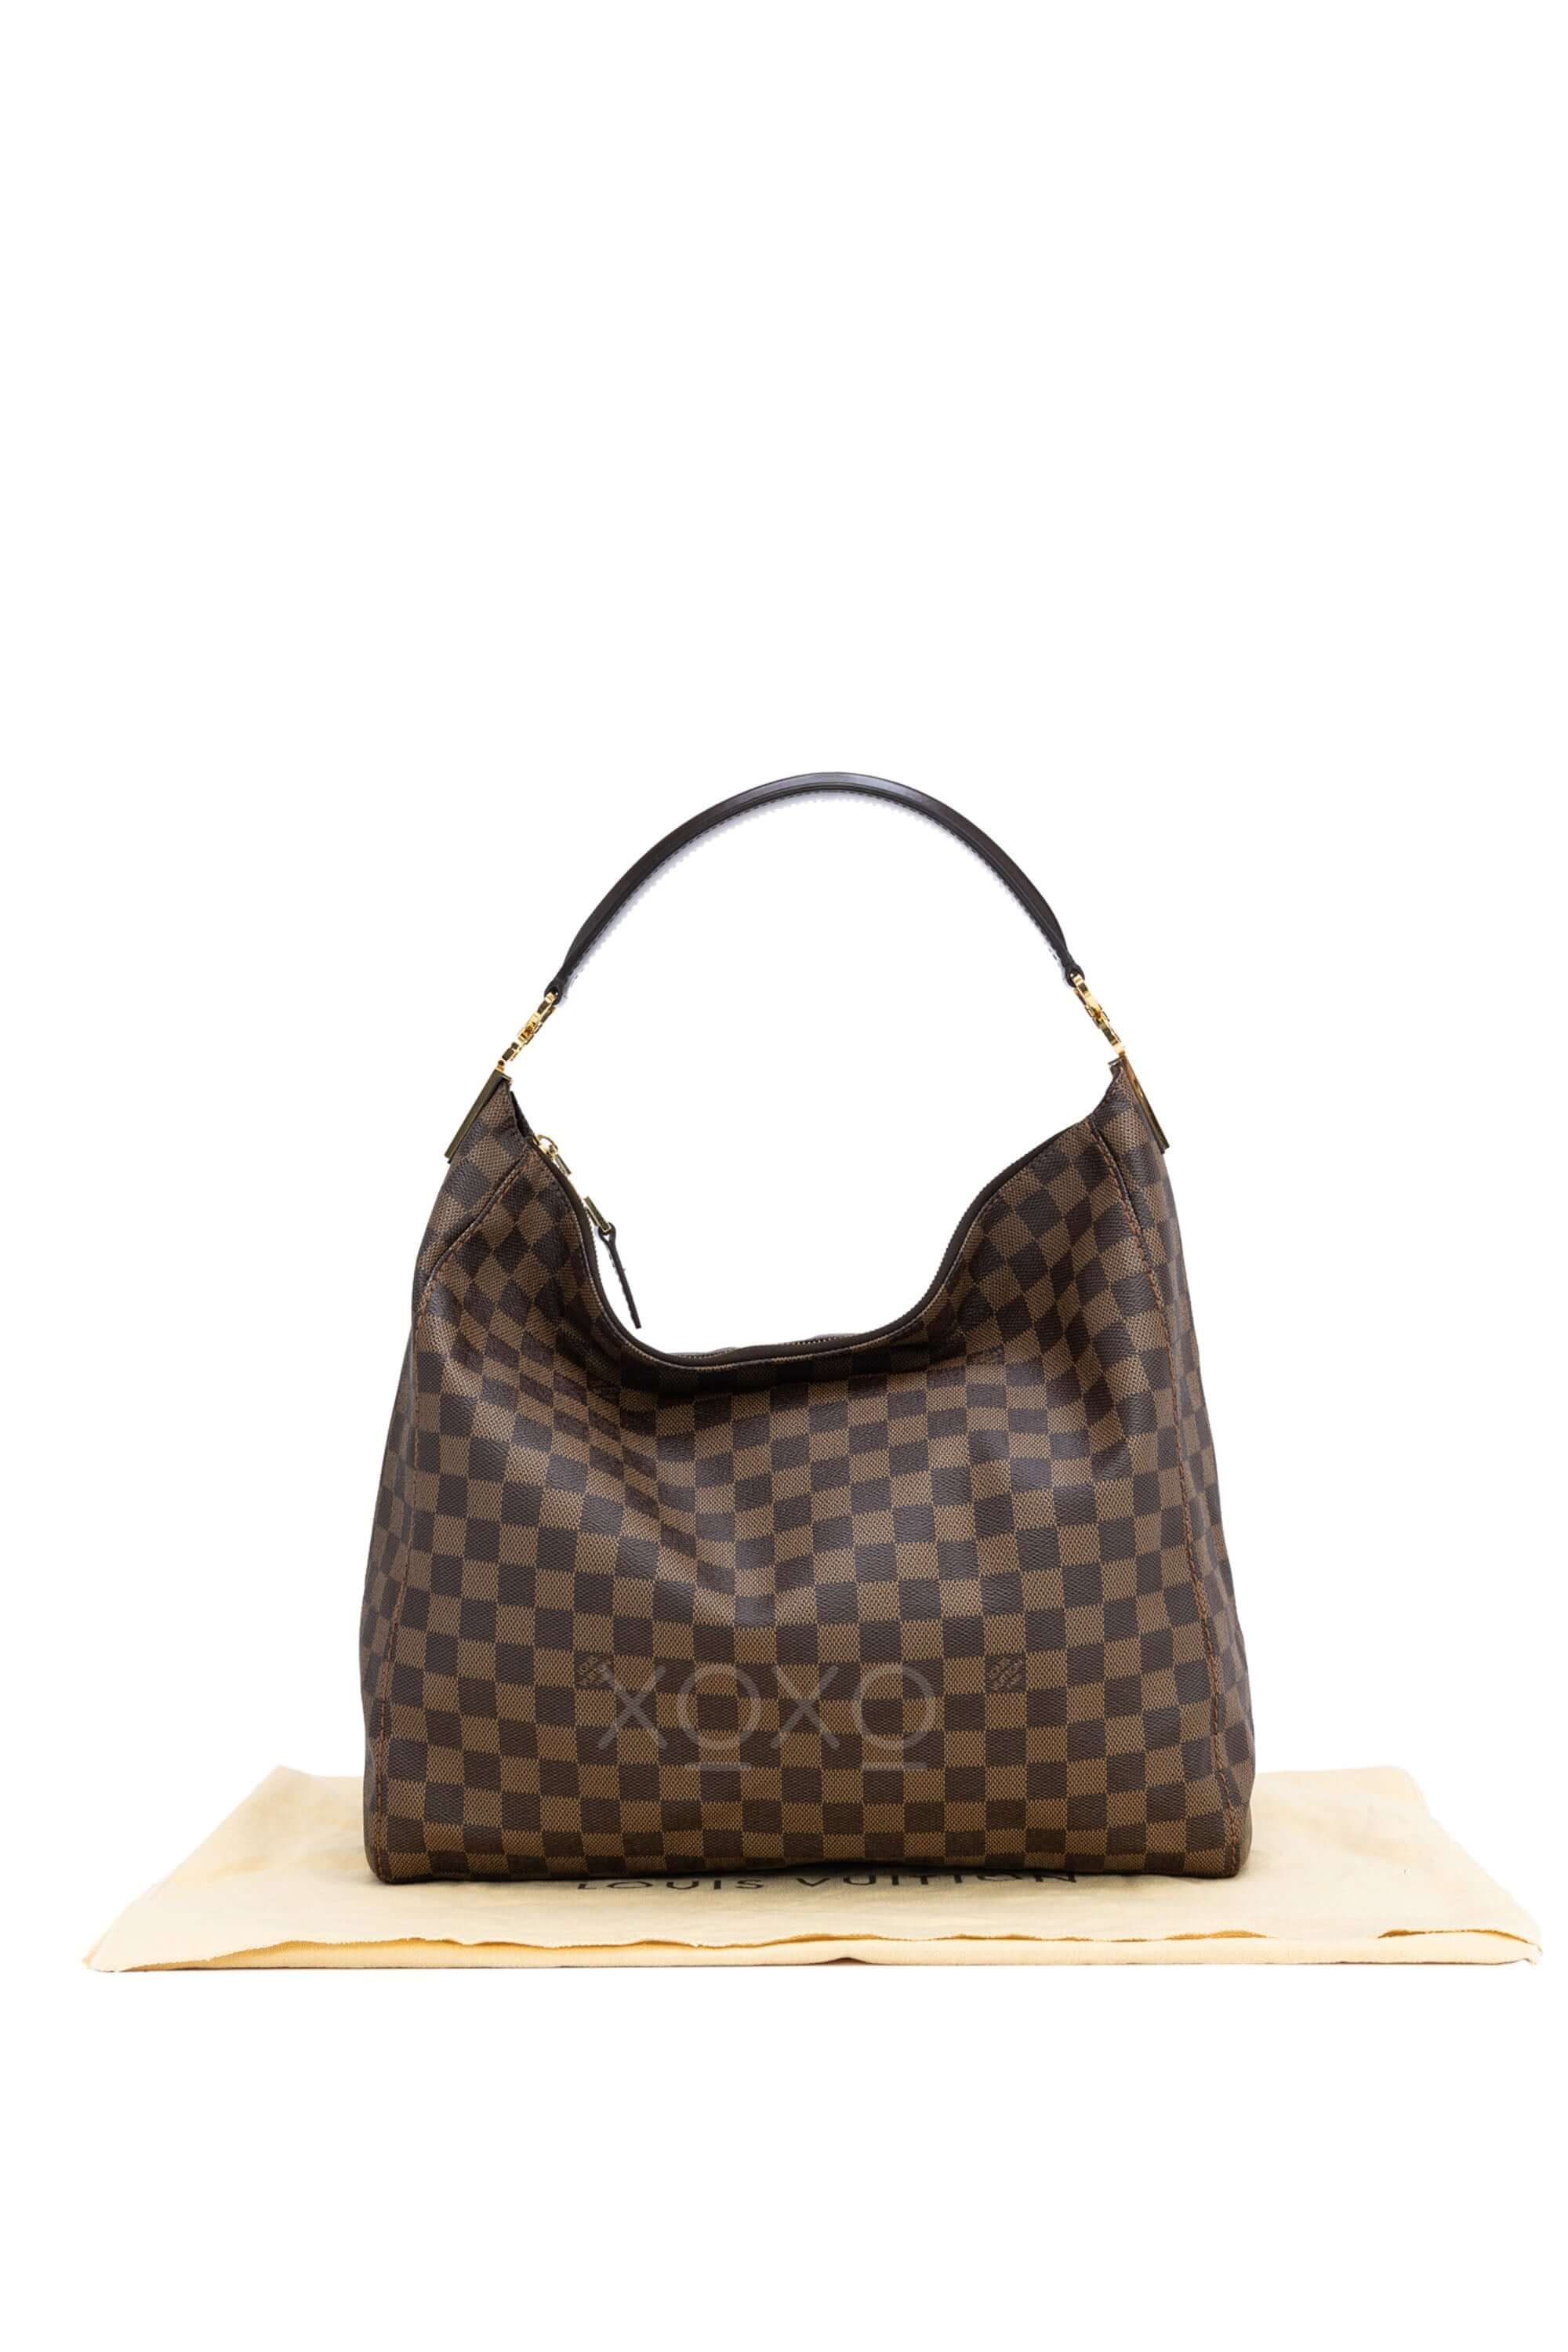 Louis Vuitton - Handbags - NEW LOUIS VUITTON DAMIER PORTOBELLO GM N41185